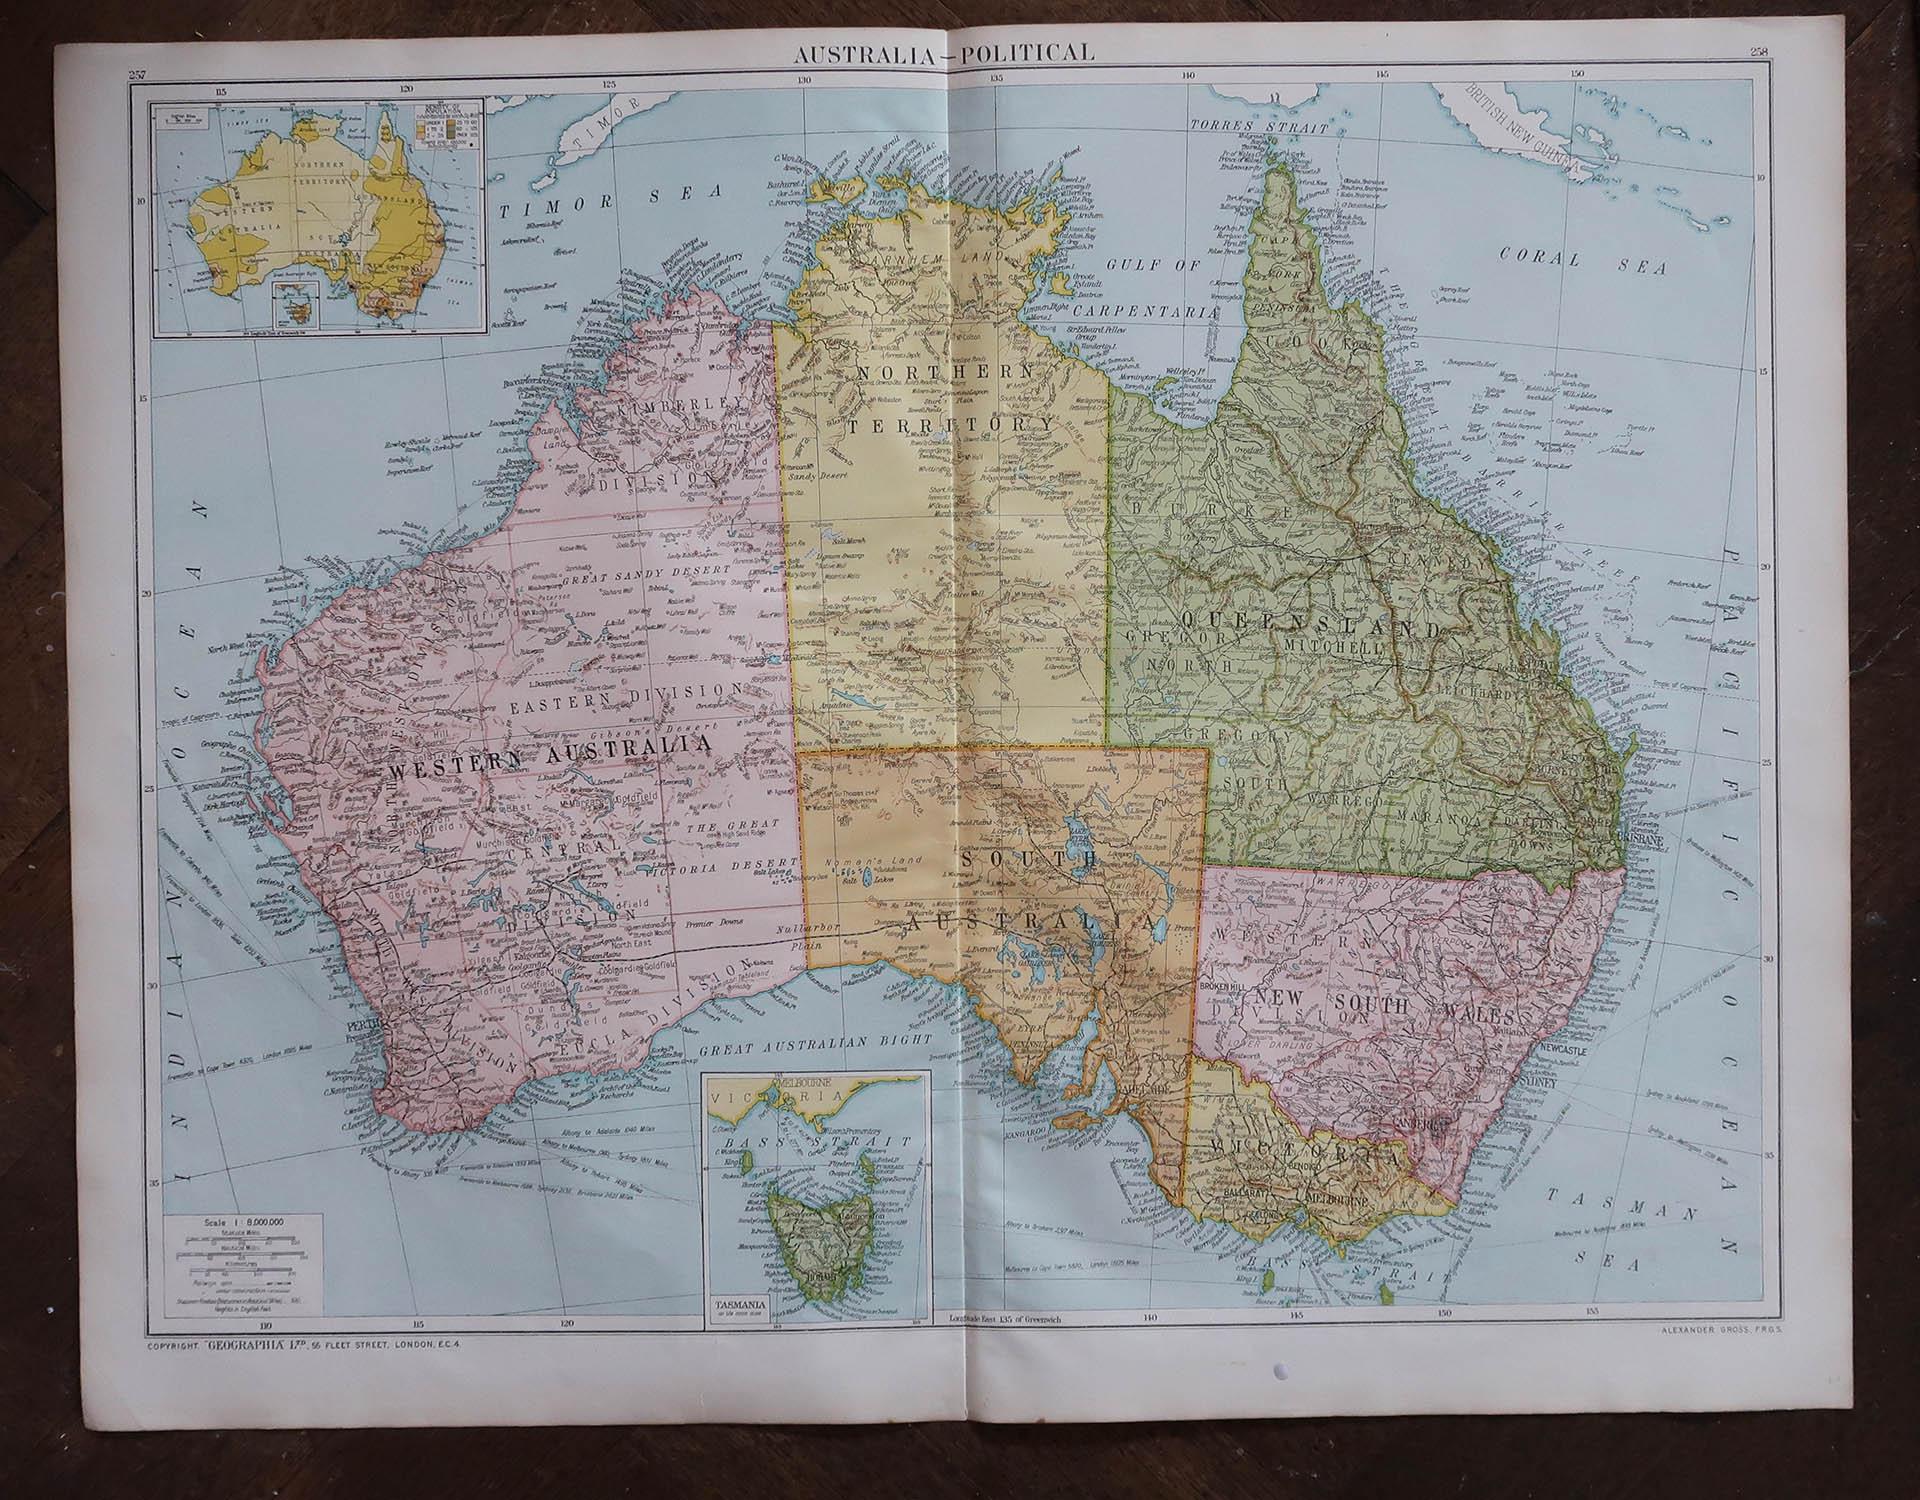 north east australia map